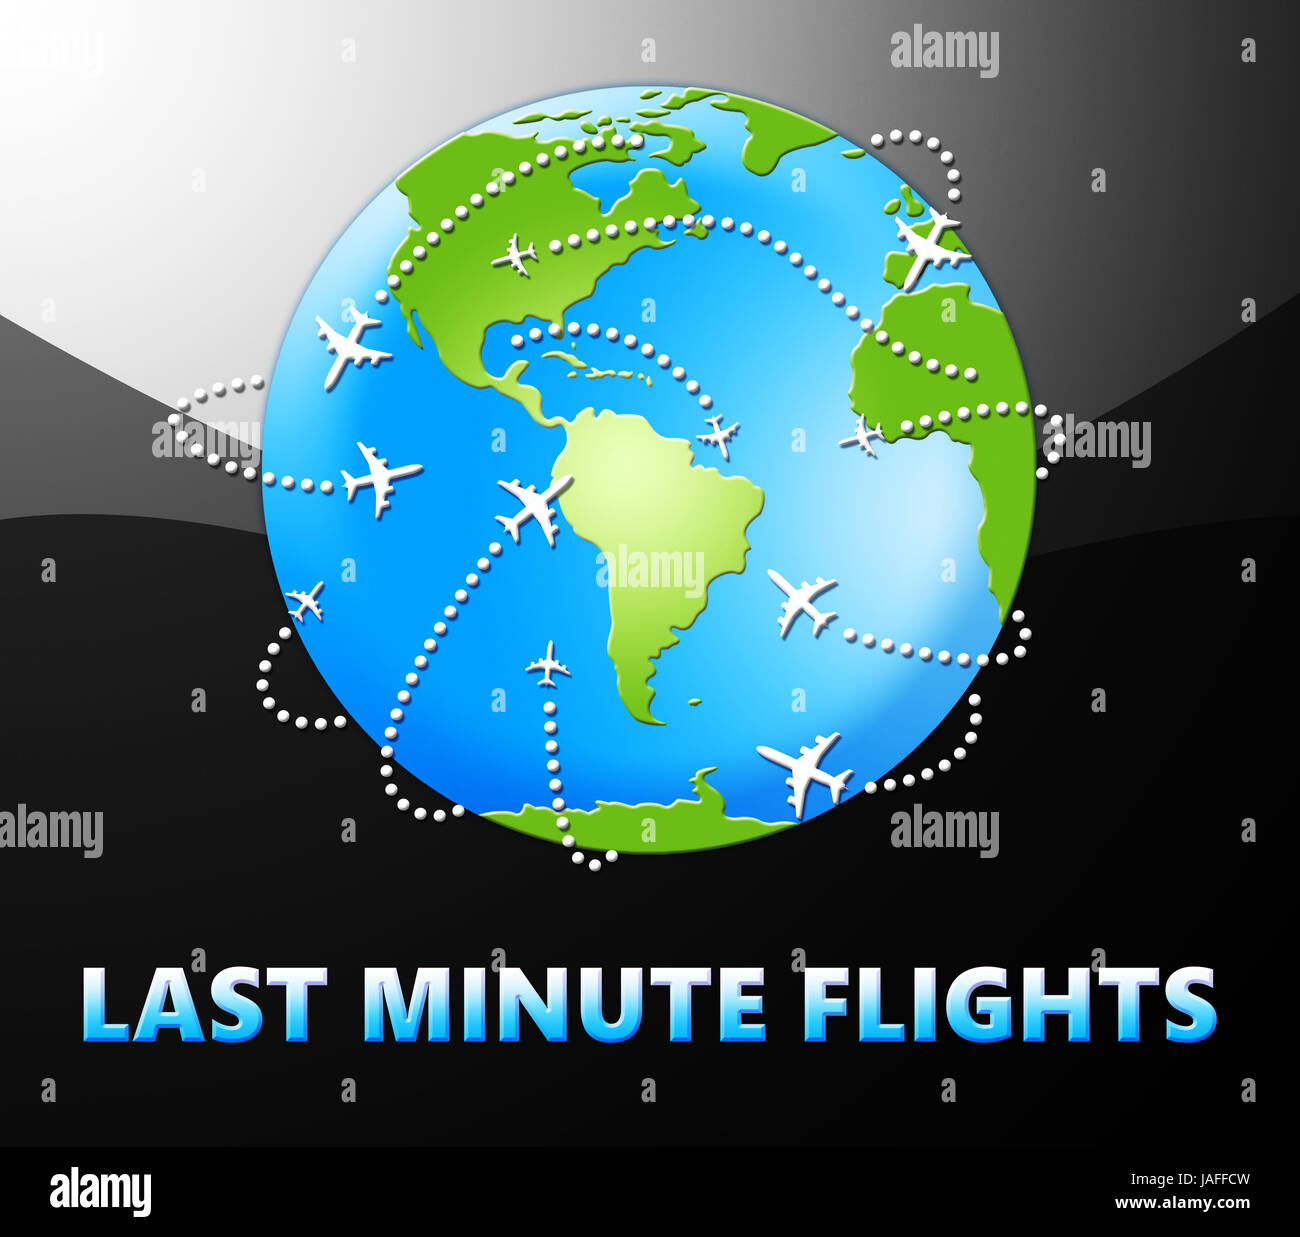 https://c8.alamy.com/comp/JAFFCW/last-minute-flights-globe-meaning-late-bargains-3d-illustration-JAFFCW.jpg